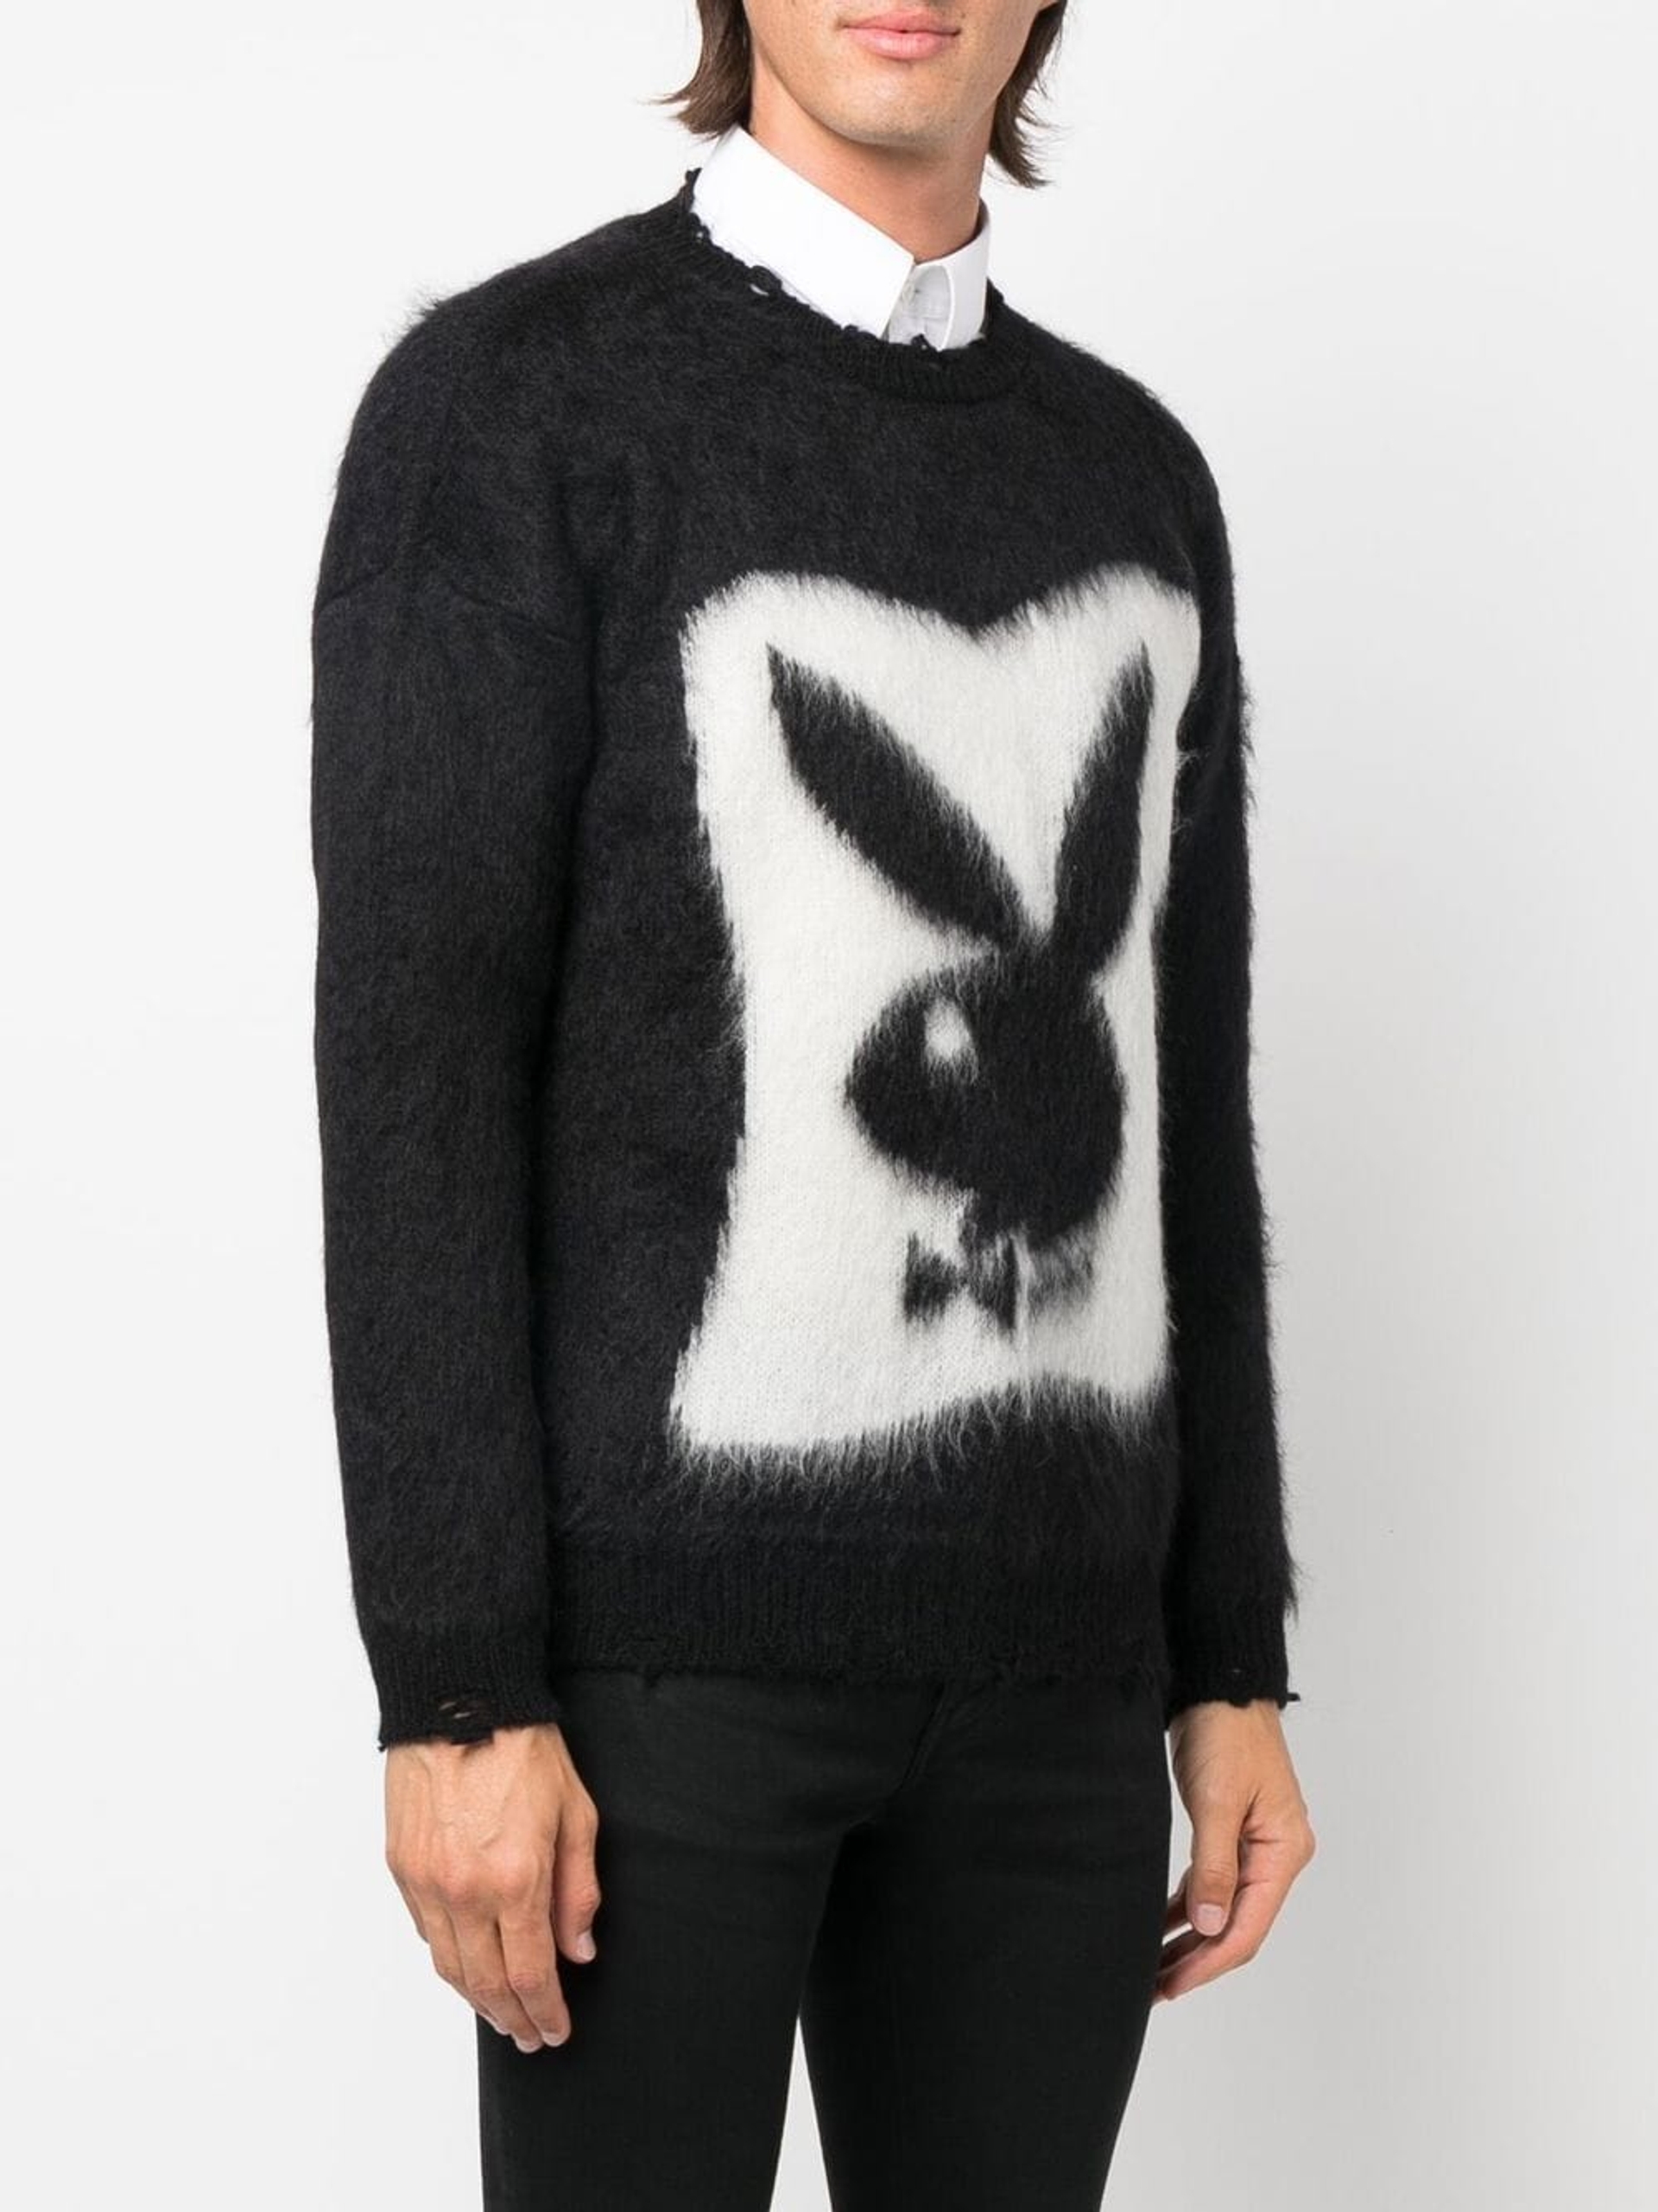 Saint Laurent x Playboy Sweater Fall/Winter 2022